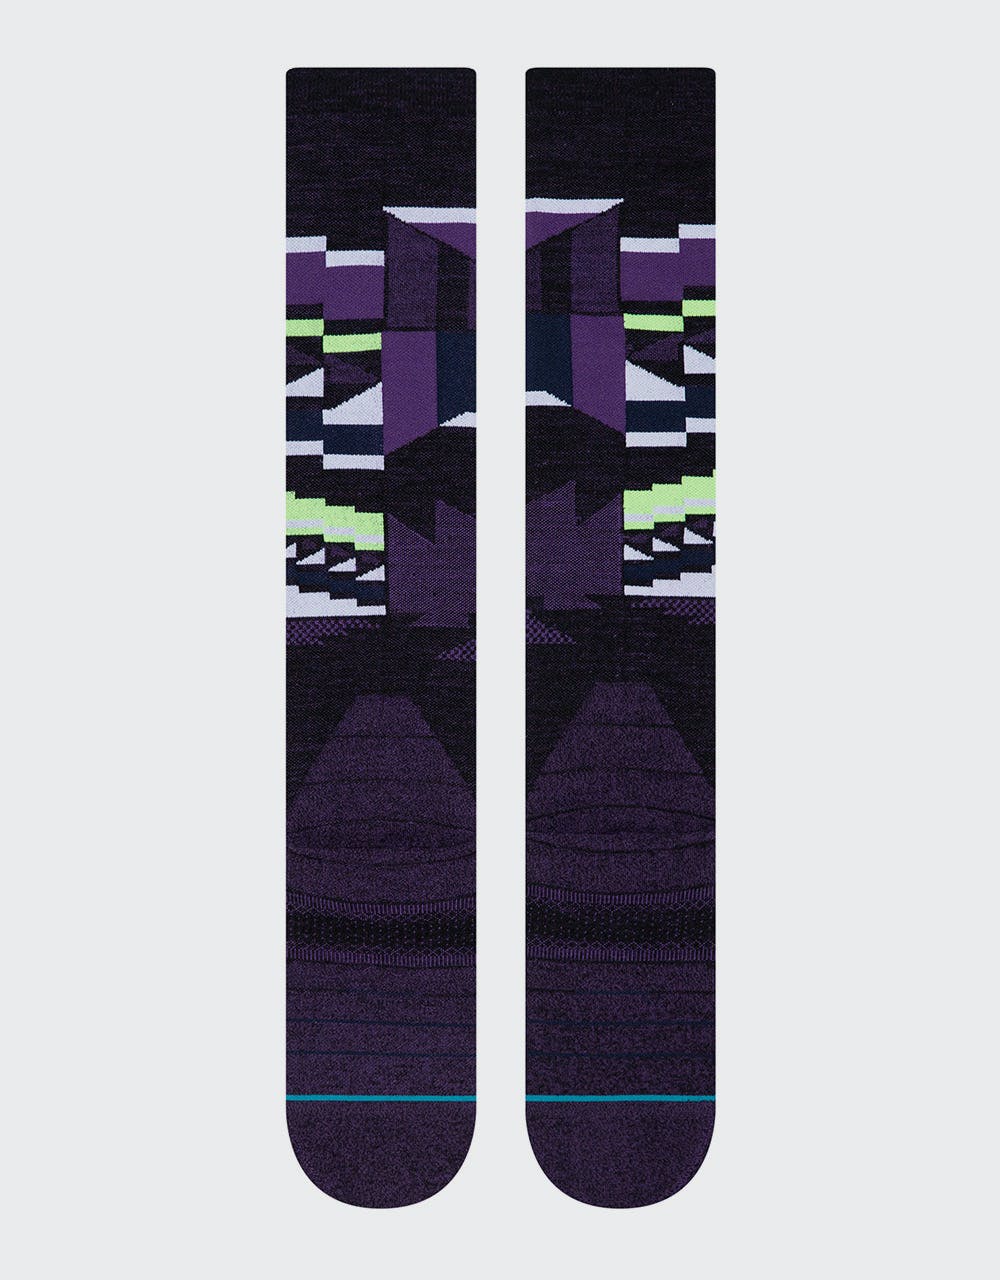 Stance CTRL ALT DLT Snowboard Socks - Black